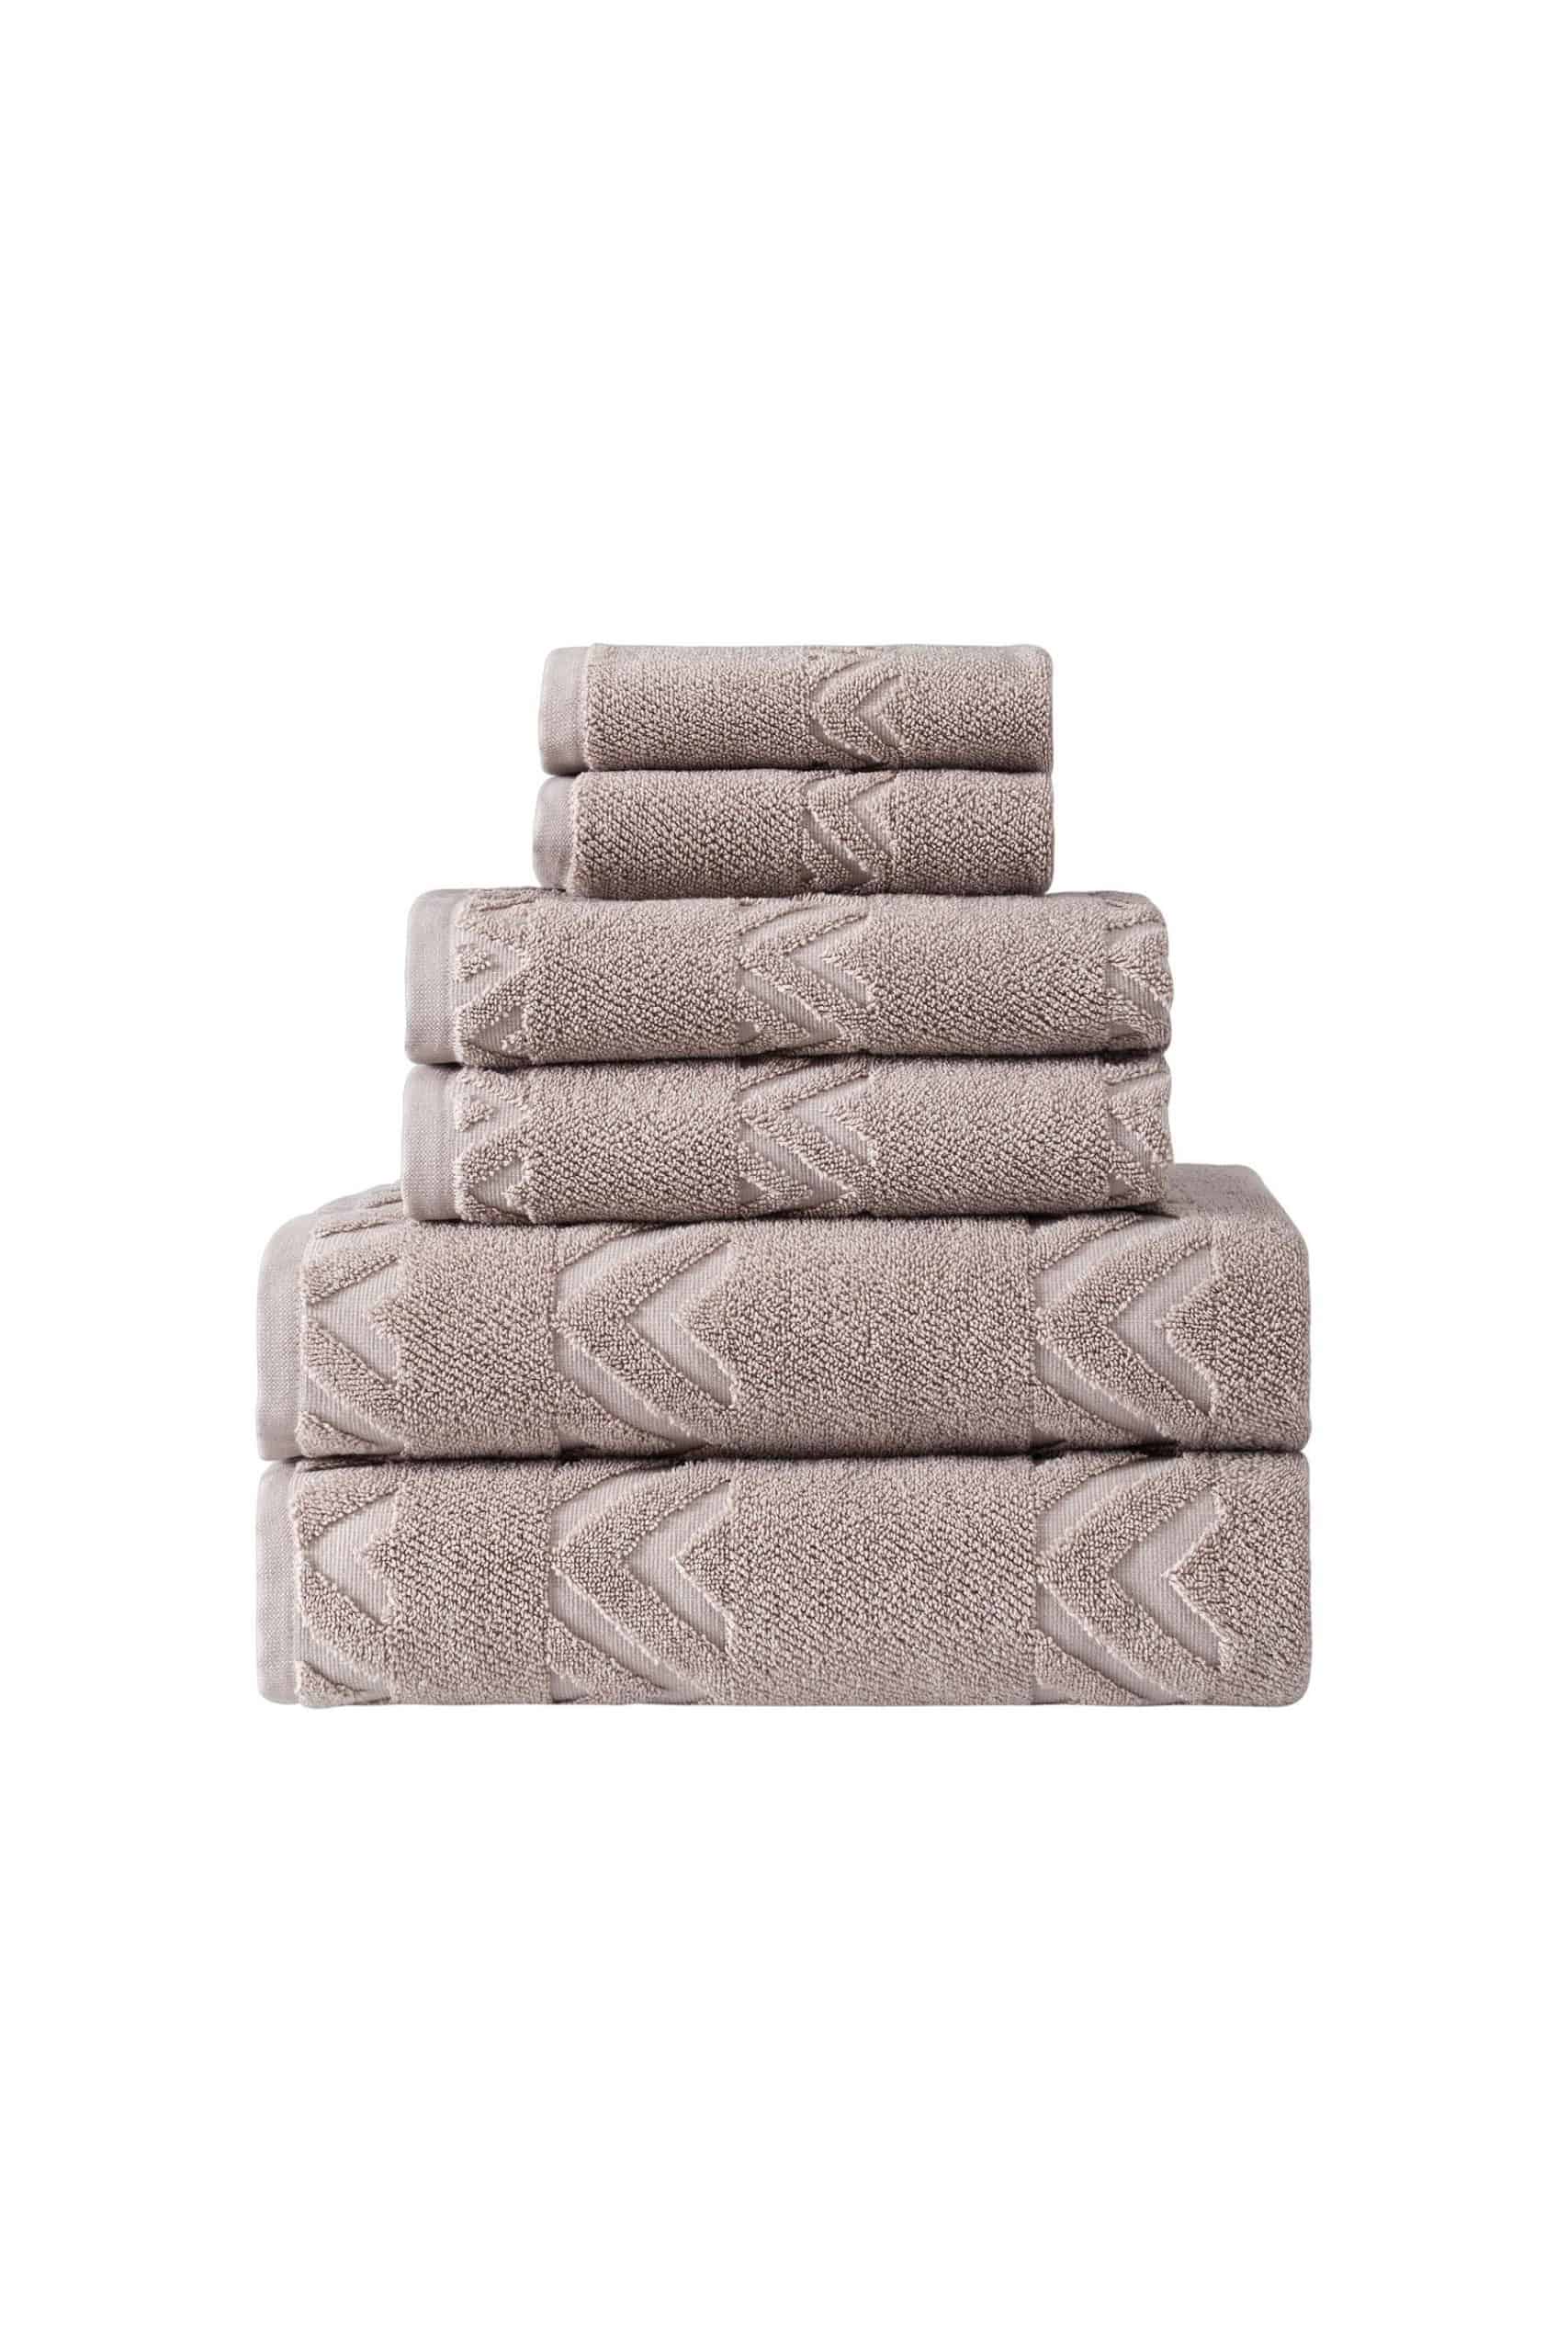 Sovrano Collection 100% Turkish Cotton Luxury Bath Sheet (Set of 2